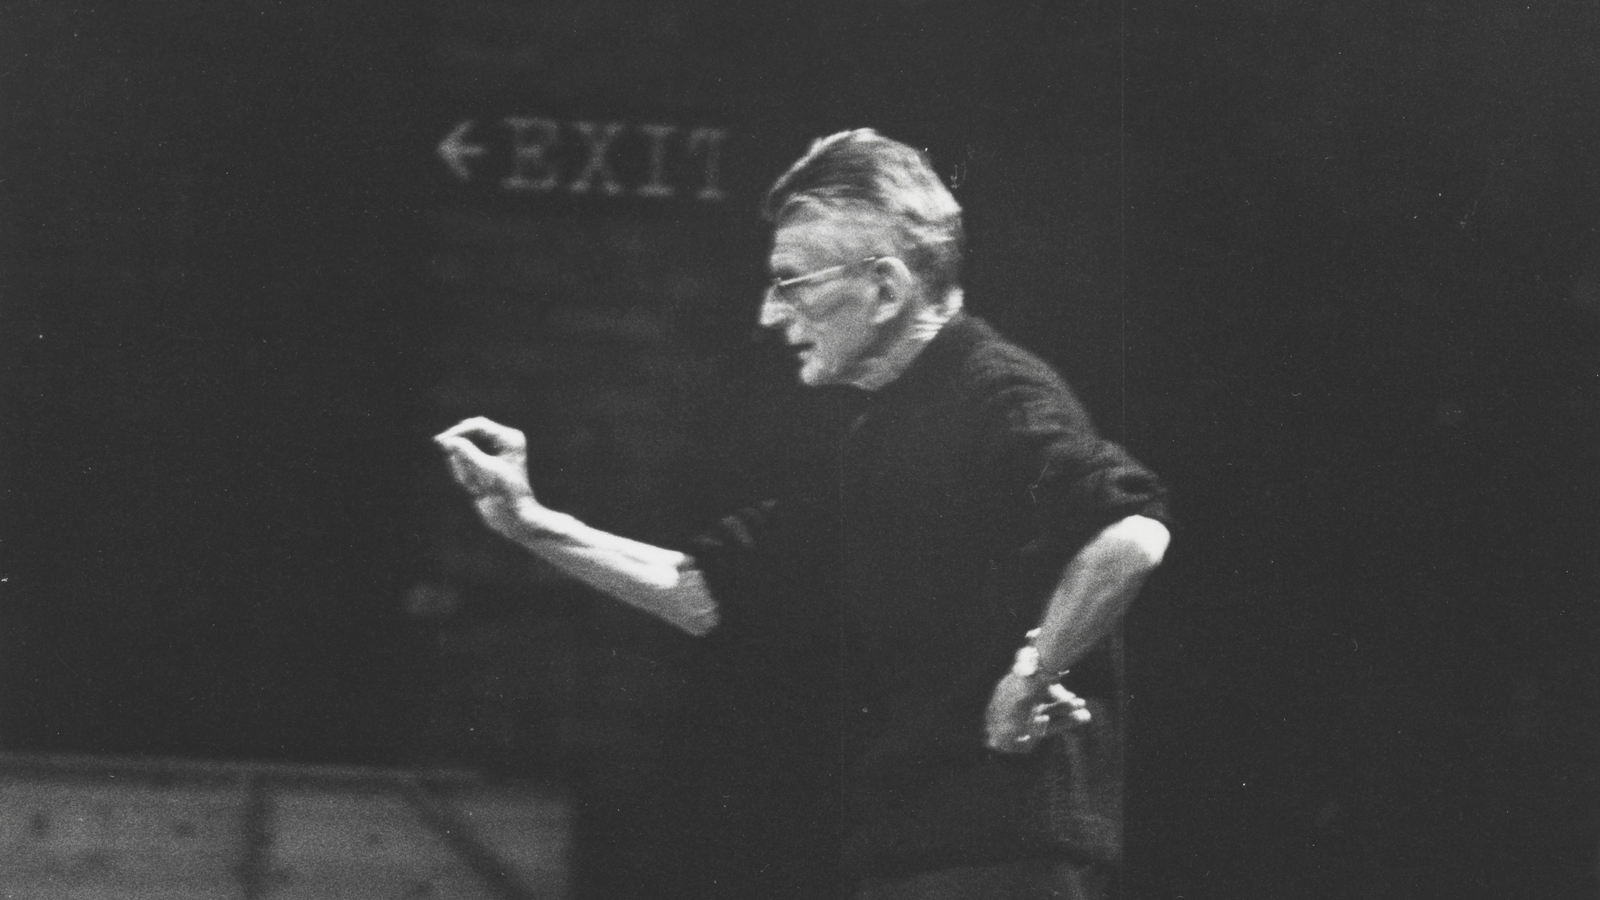 The Philosophy of Samuel Beckett by John Calder